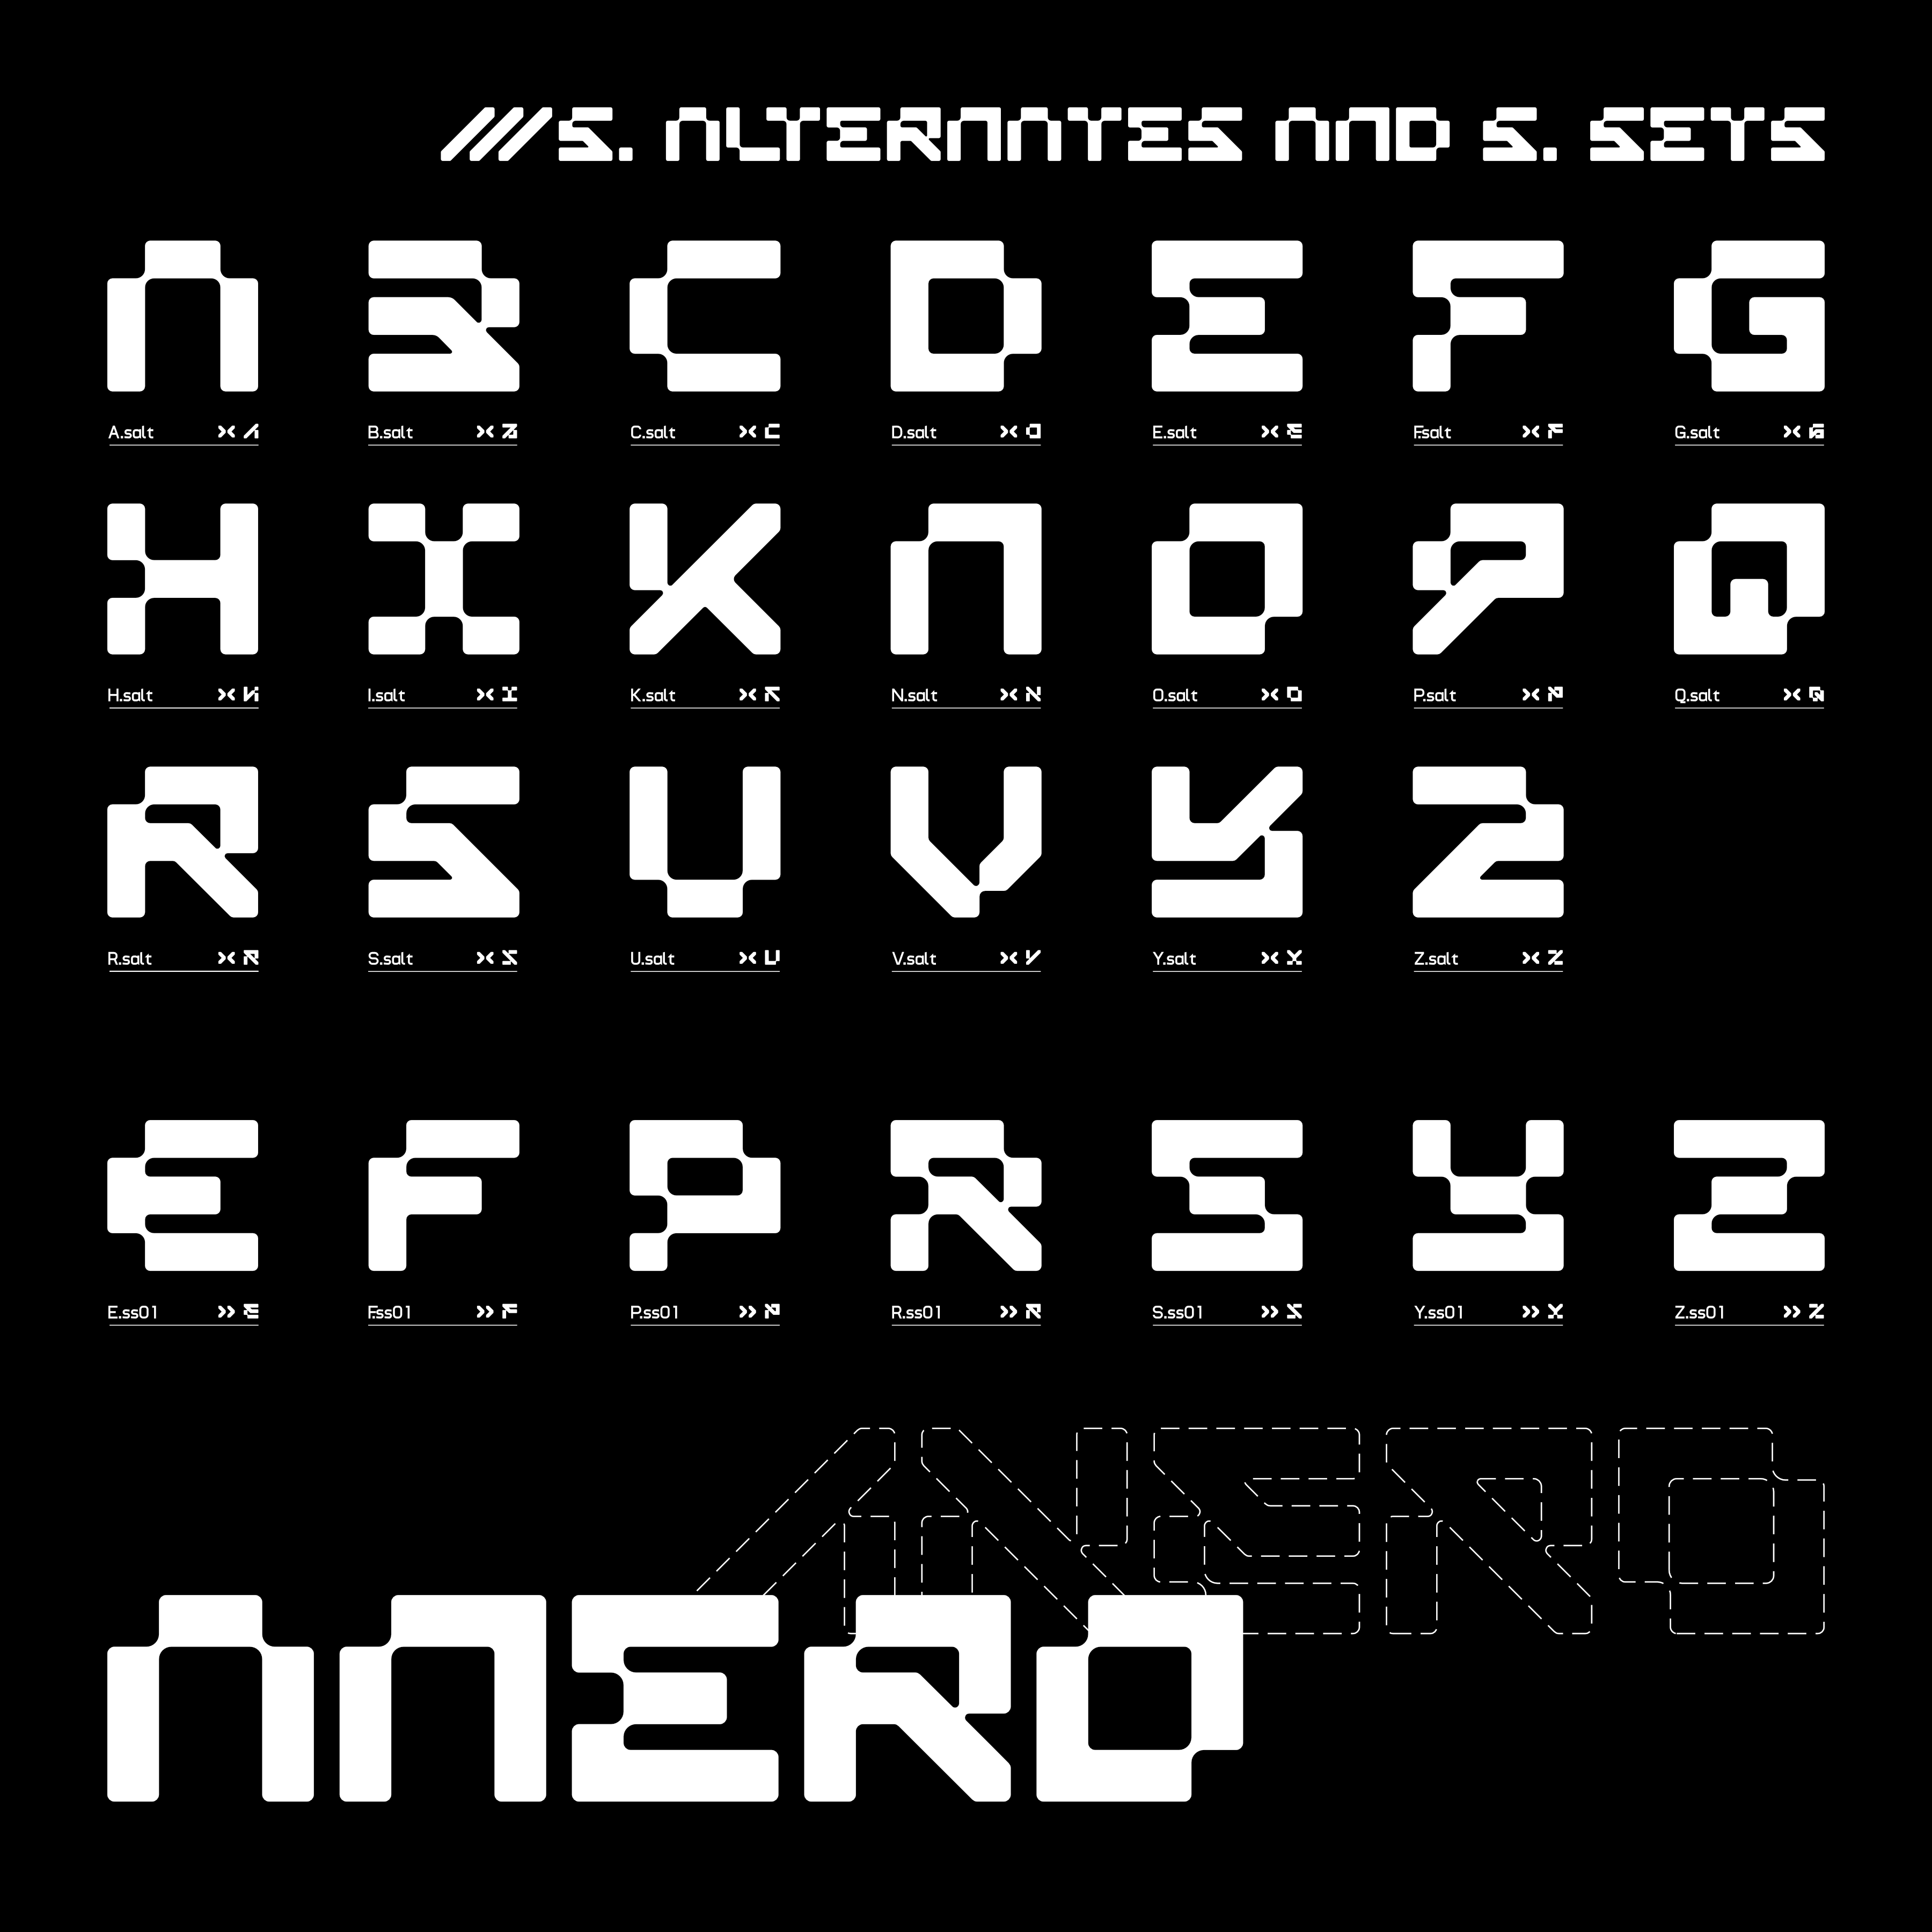 ANERO Typeface